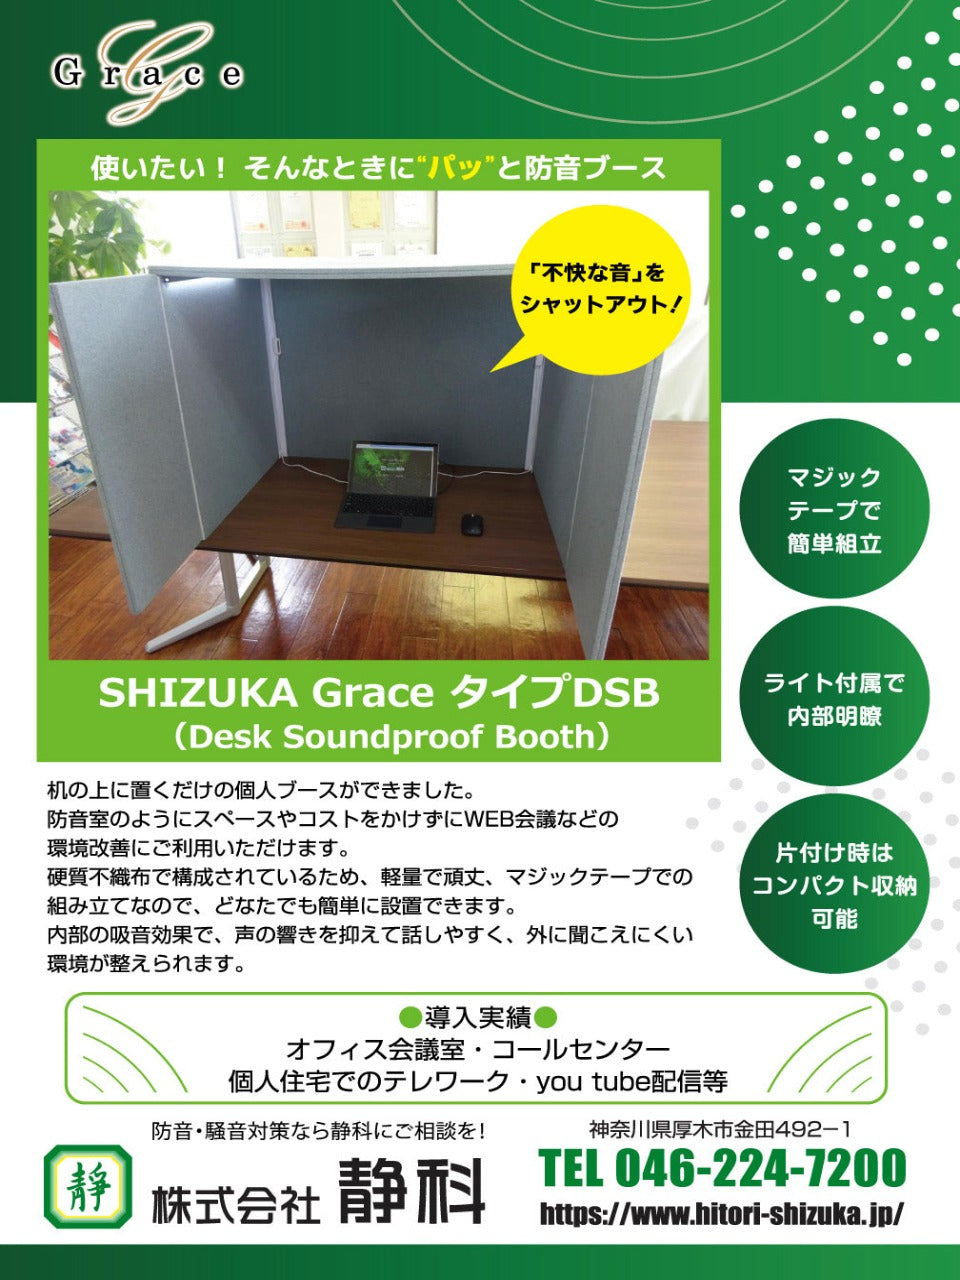 SHIZUKA Grace タイプDSB（デスク用吸音ブース） – サイレント